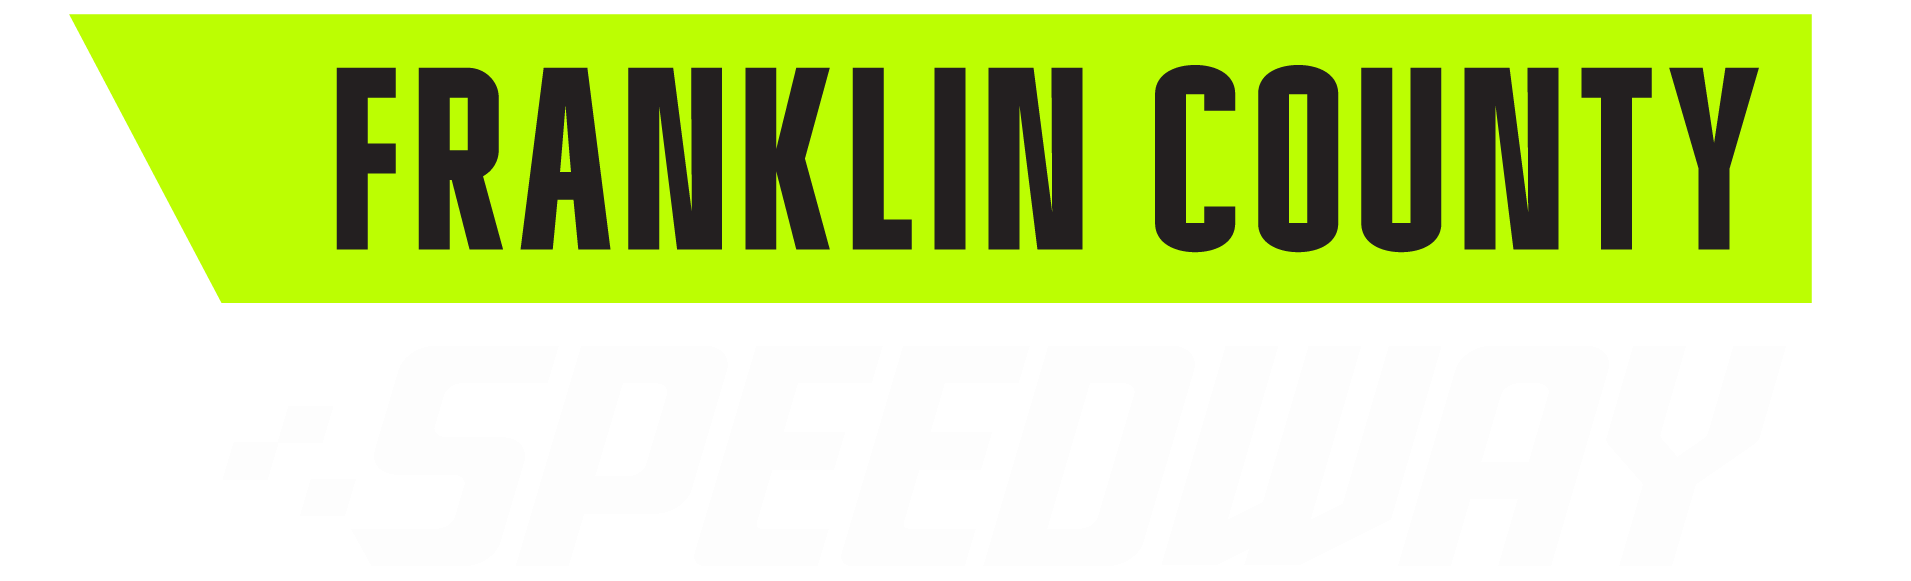 Franklin County Speedway